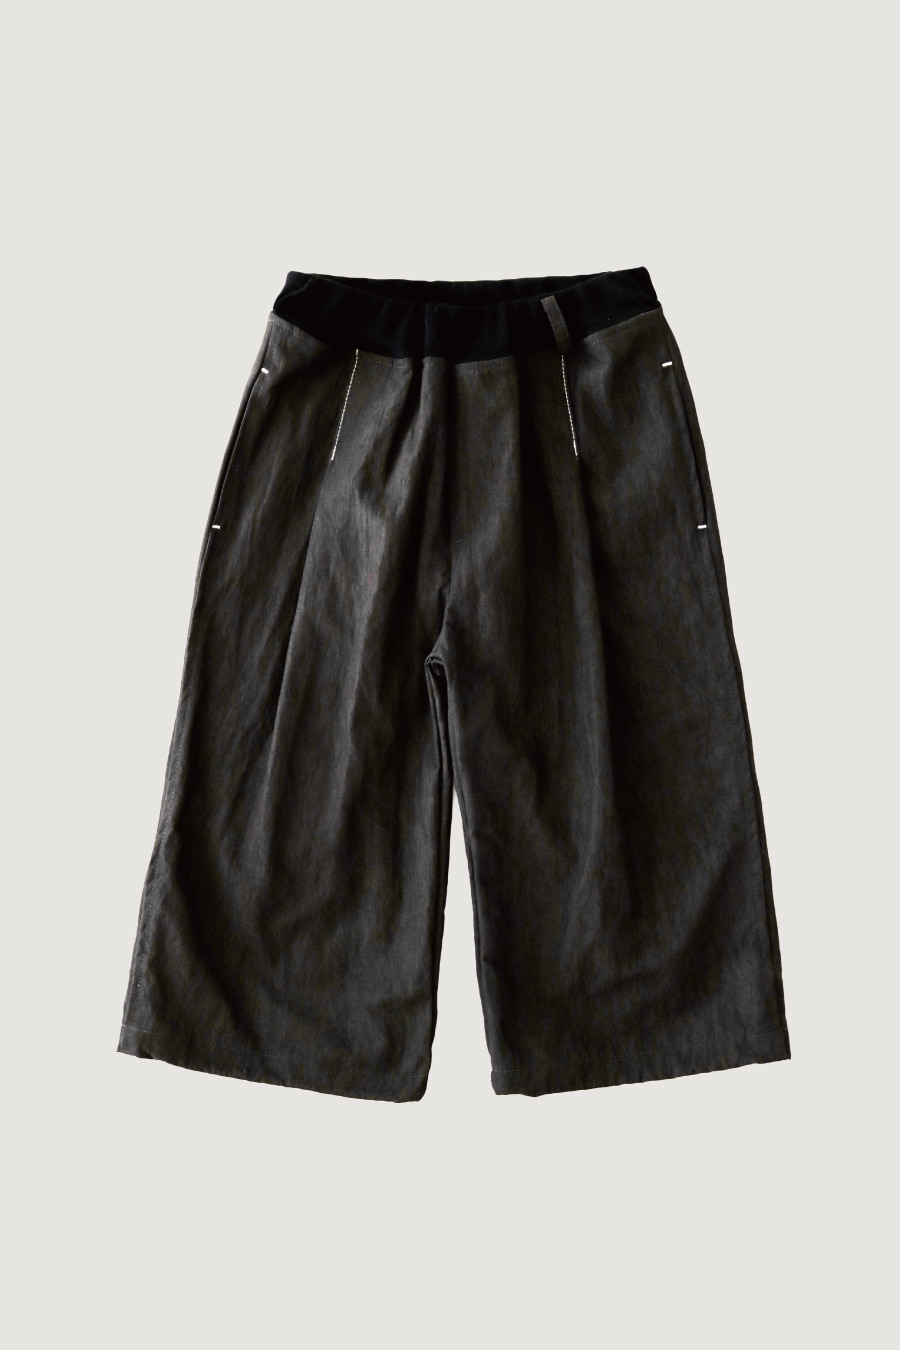 Stone stitch wide string pants (Black)